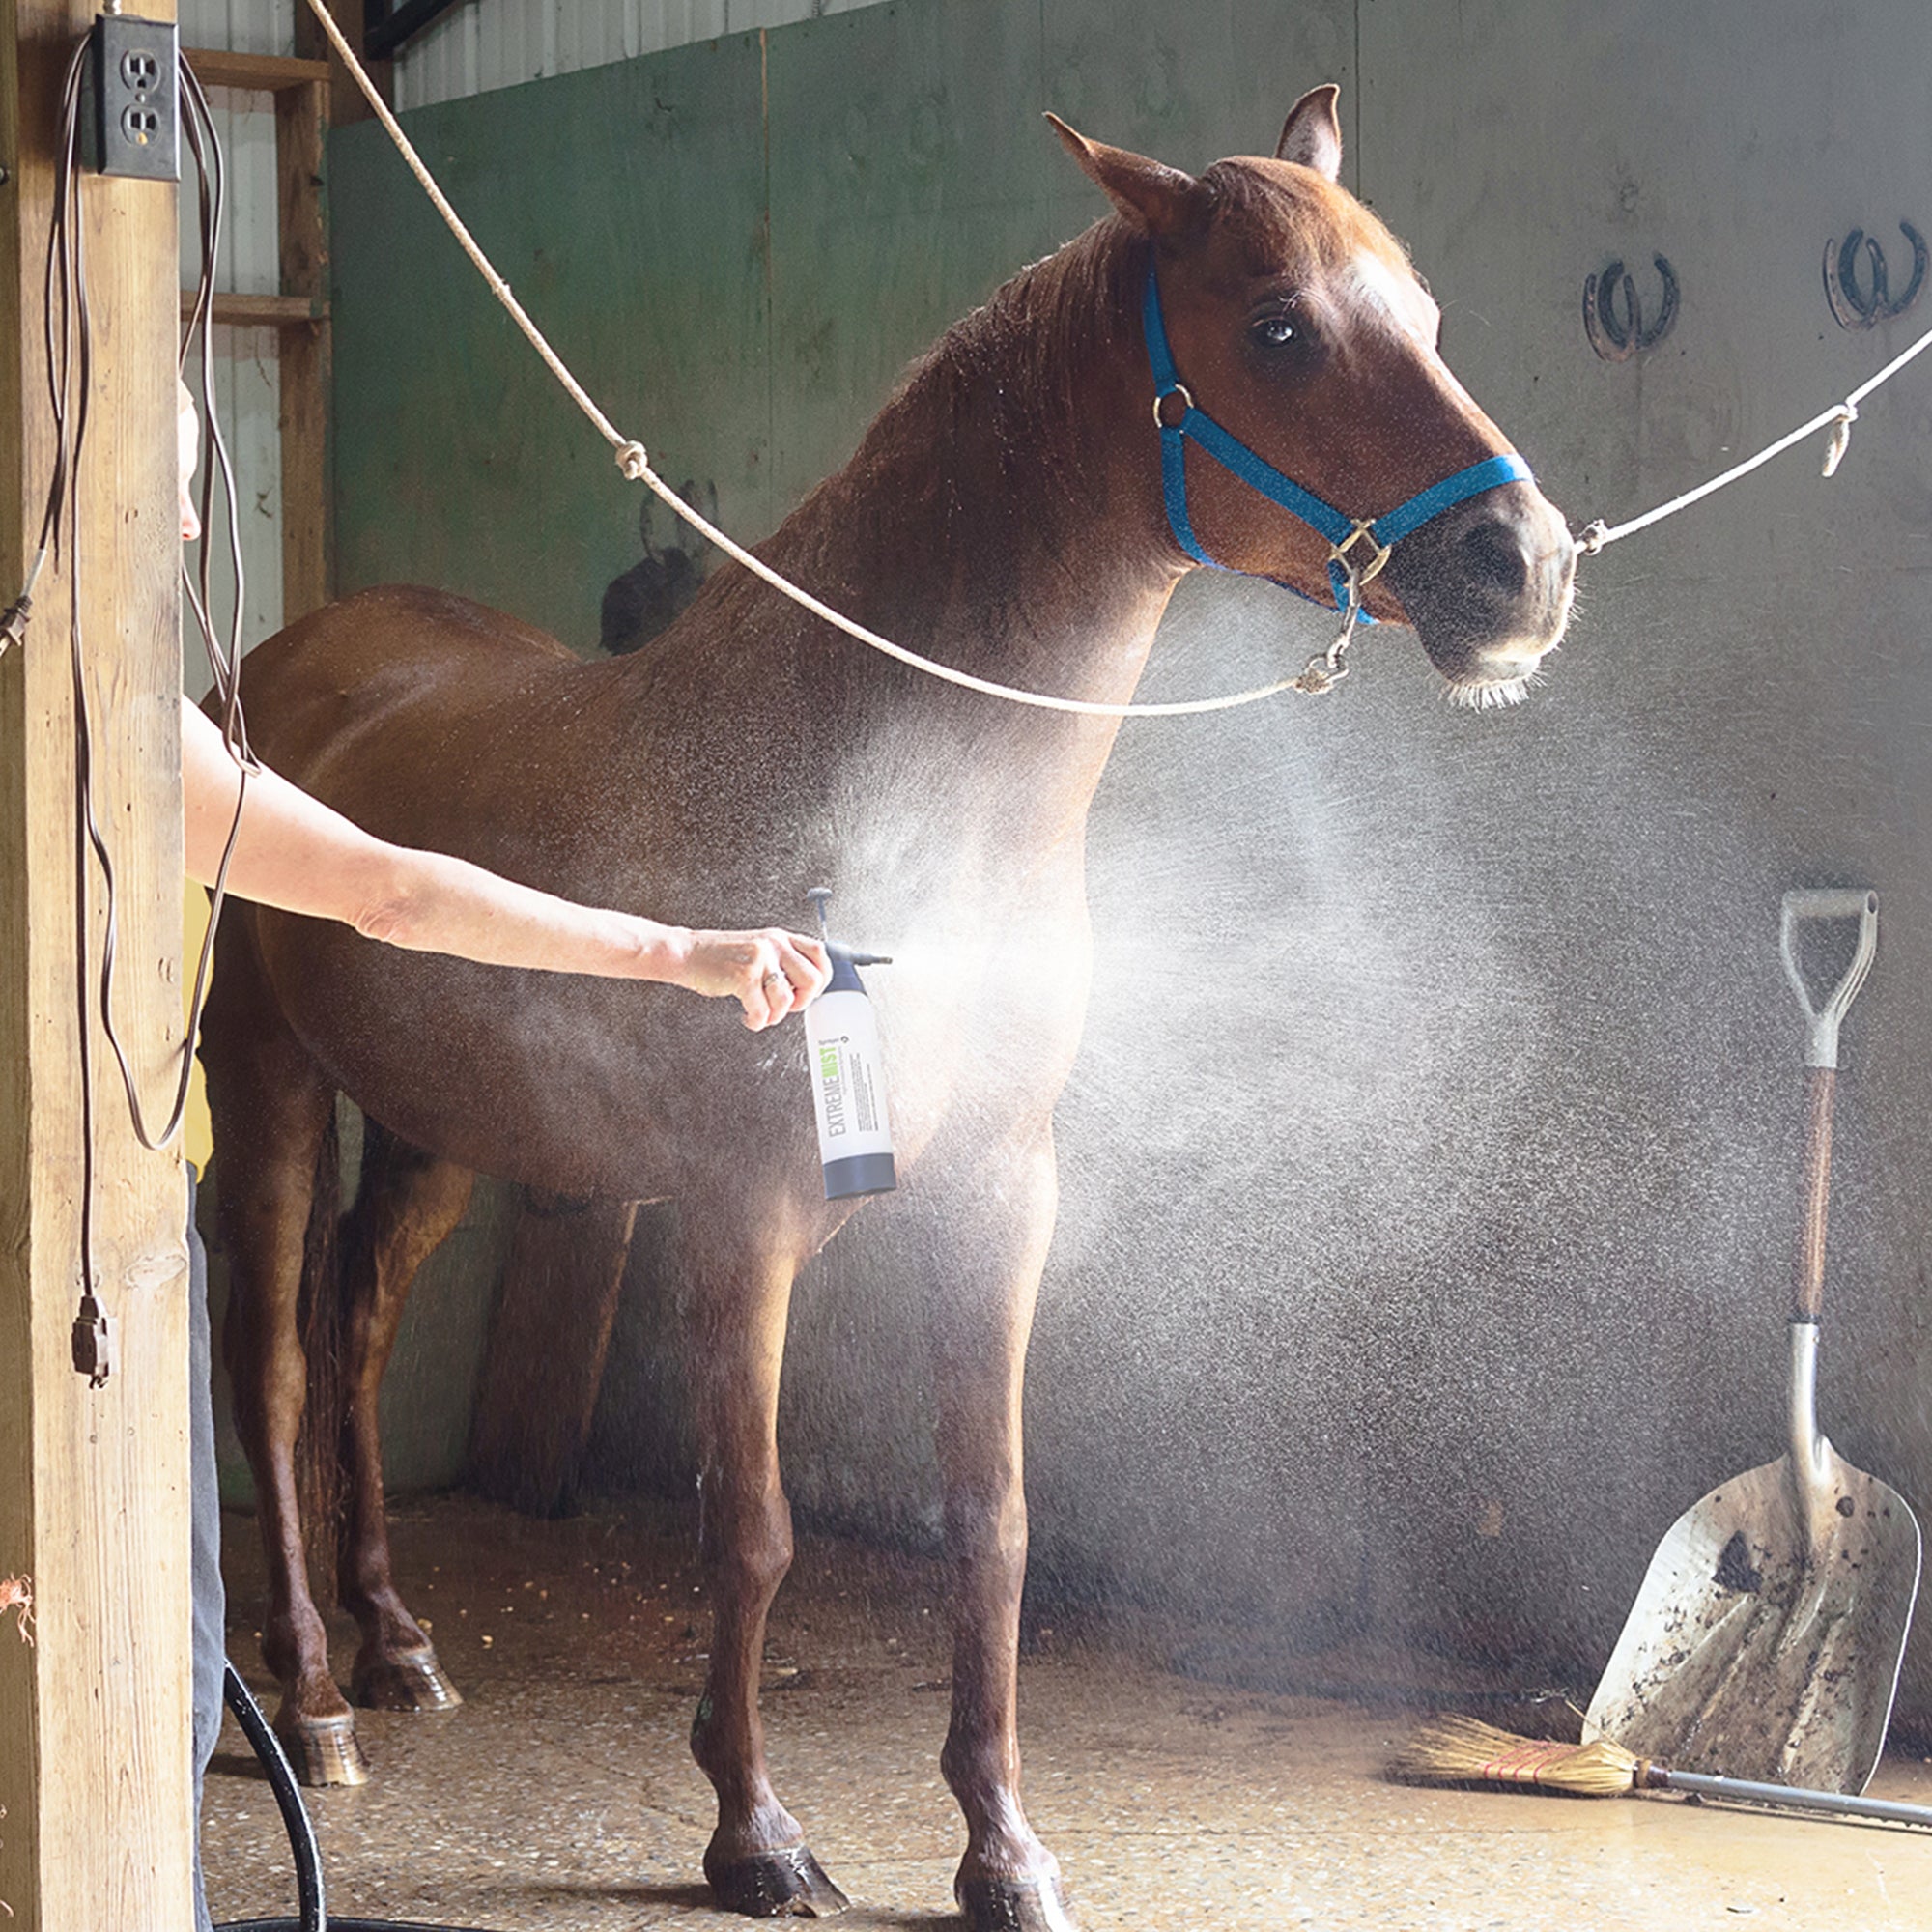 horse mister pump-up sprayer mist cooling horse